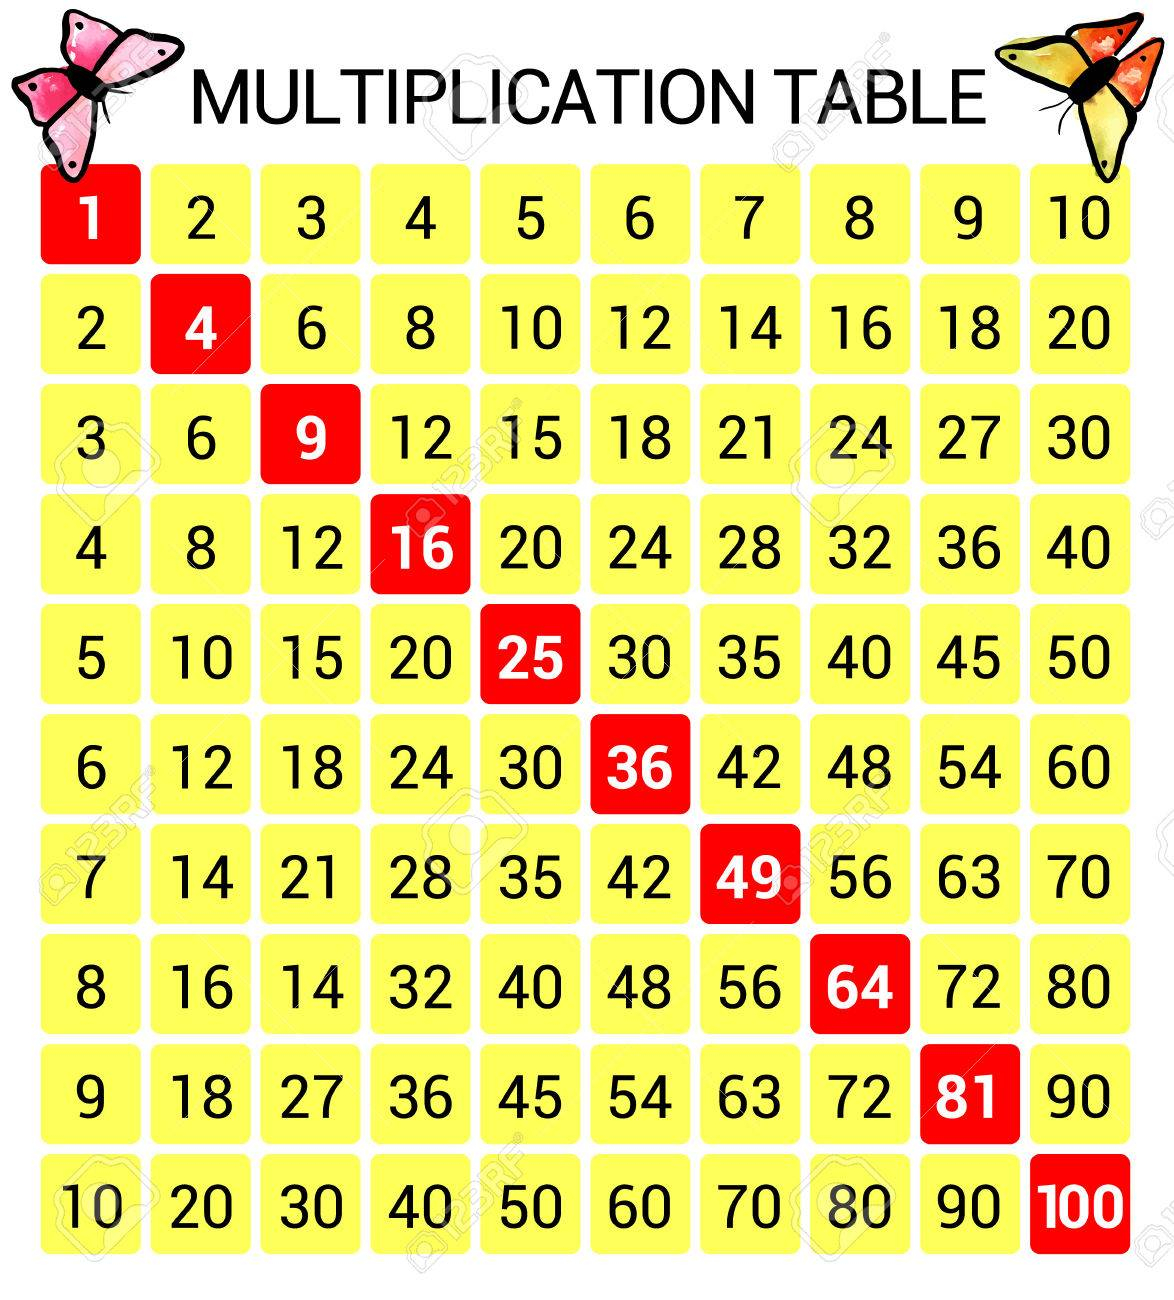 Multiplication Table. Educational Illustration Chart For School..